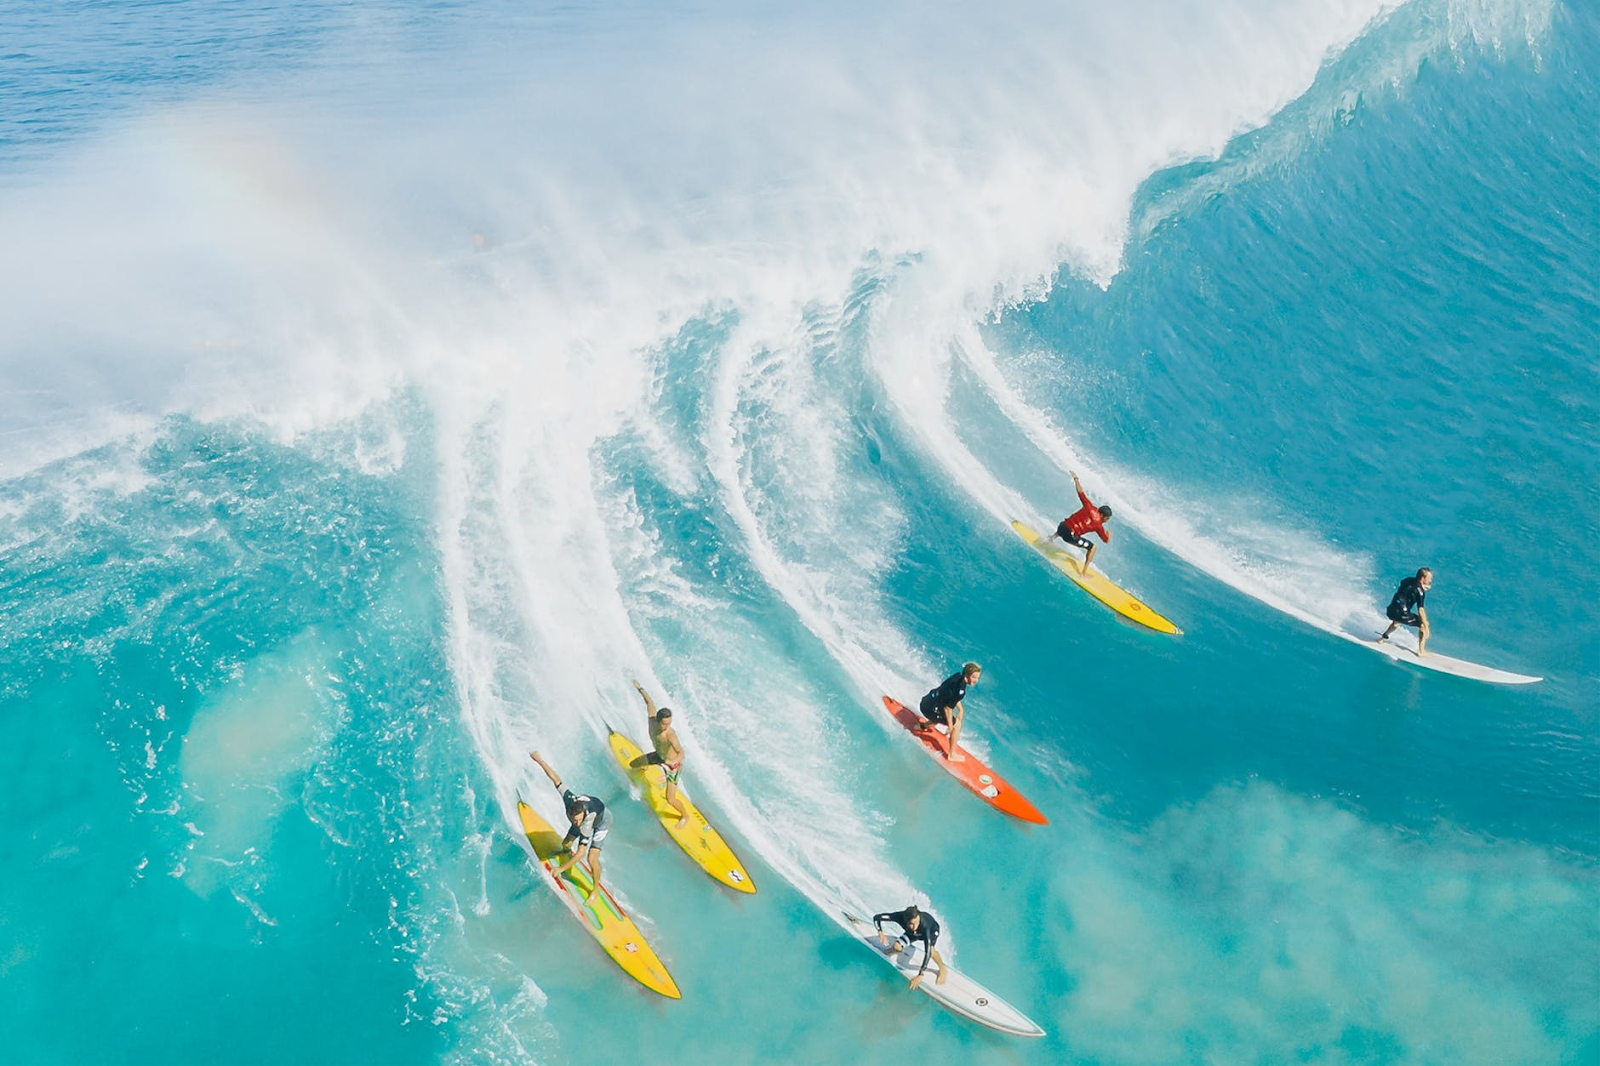 Who Pioneered Big Wave Surfing?